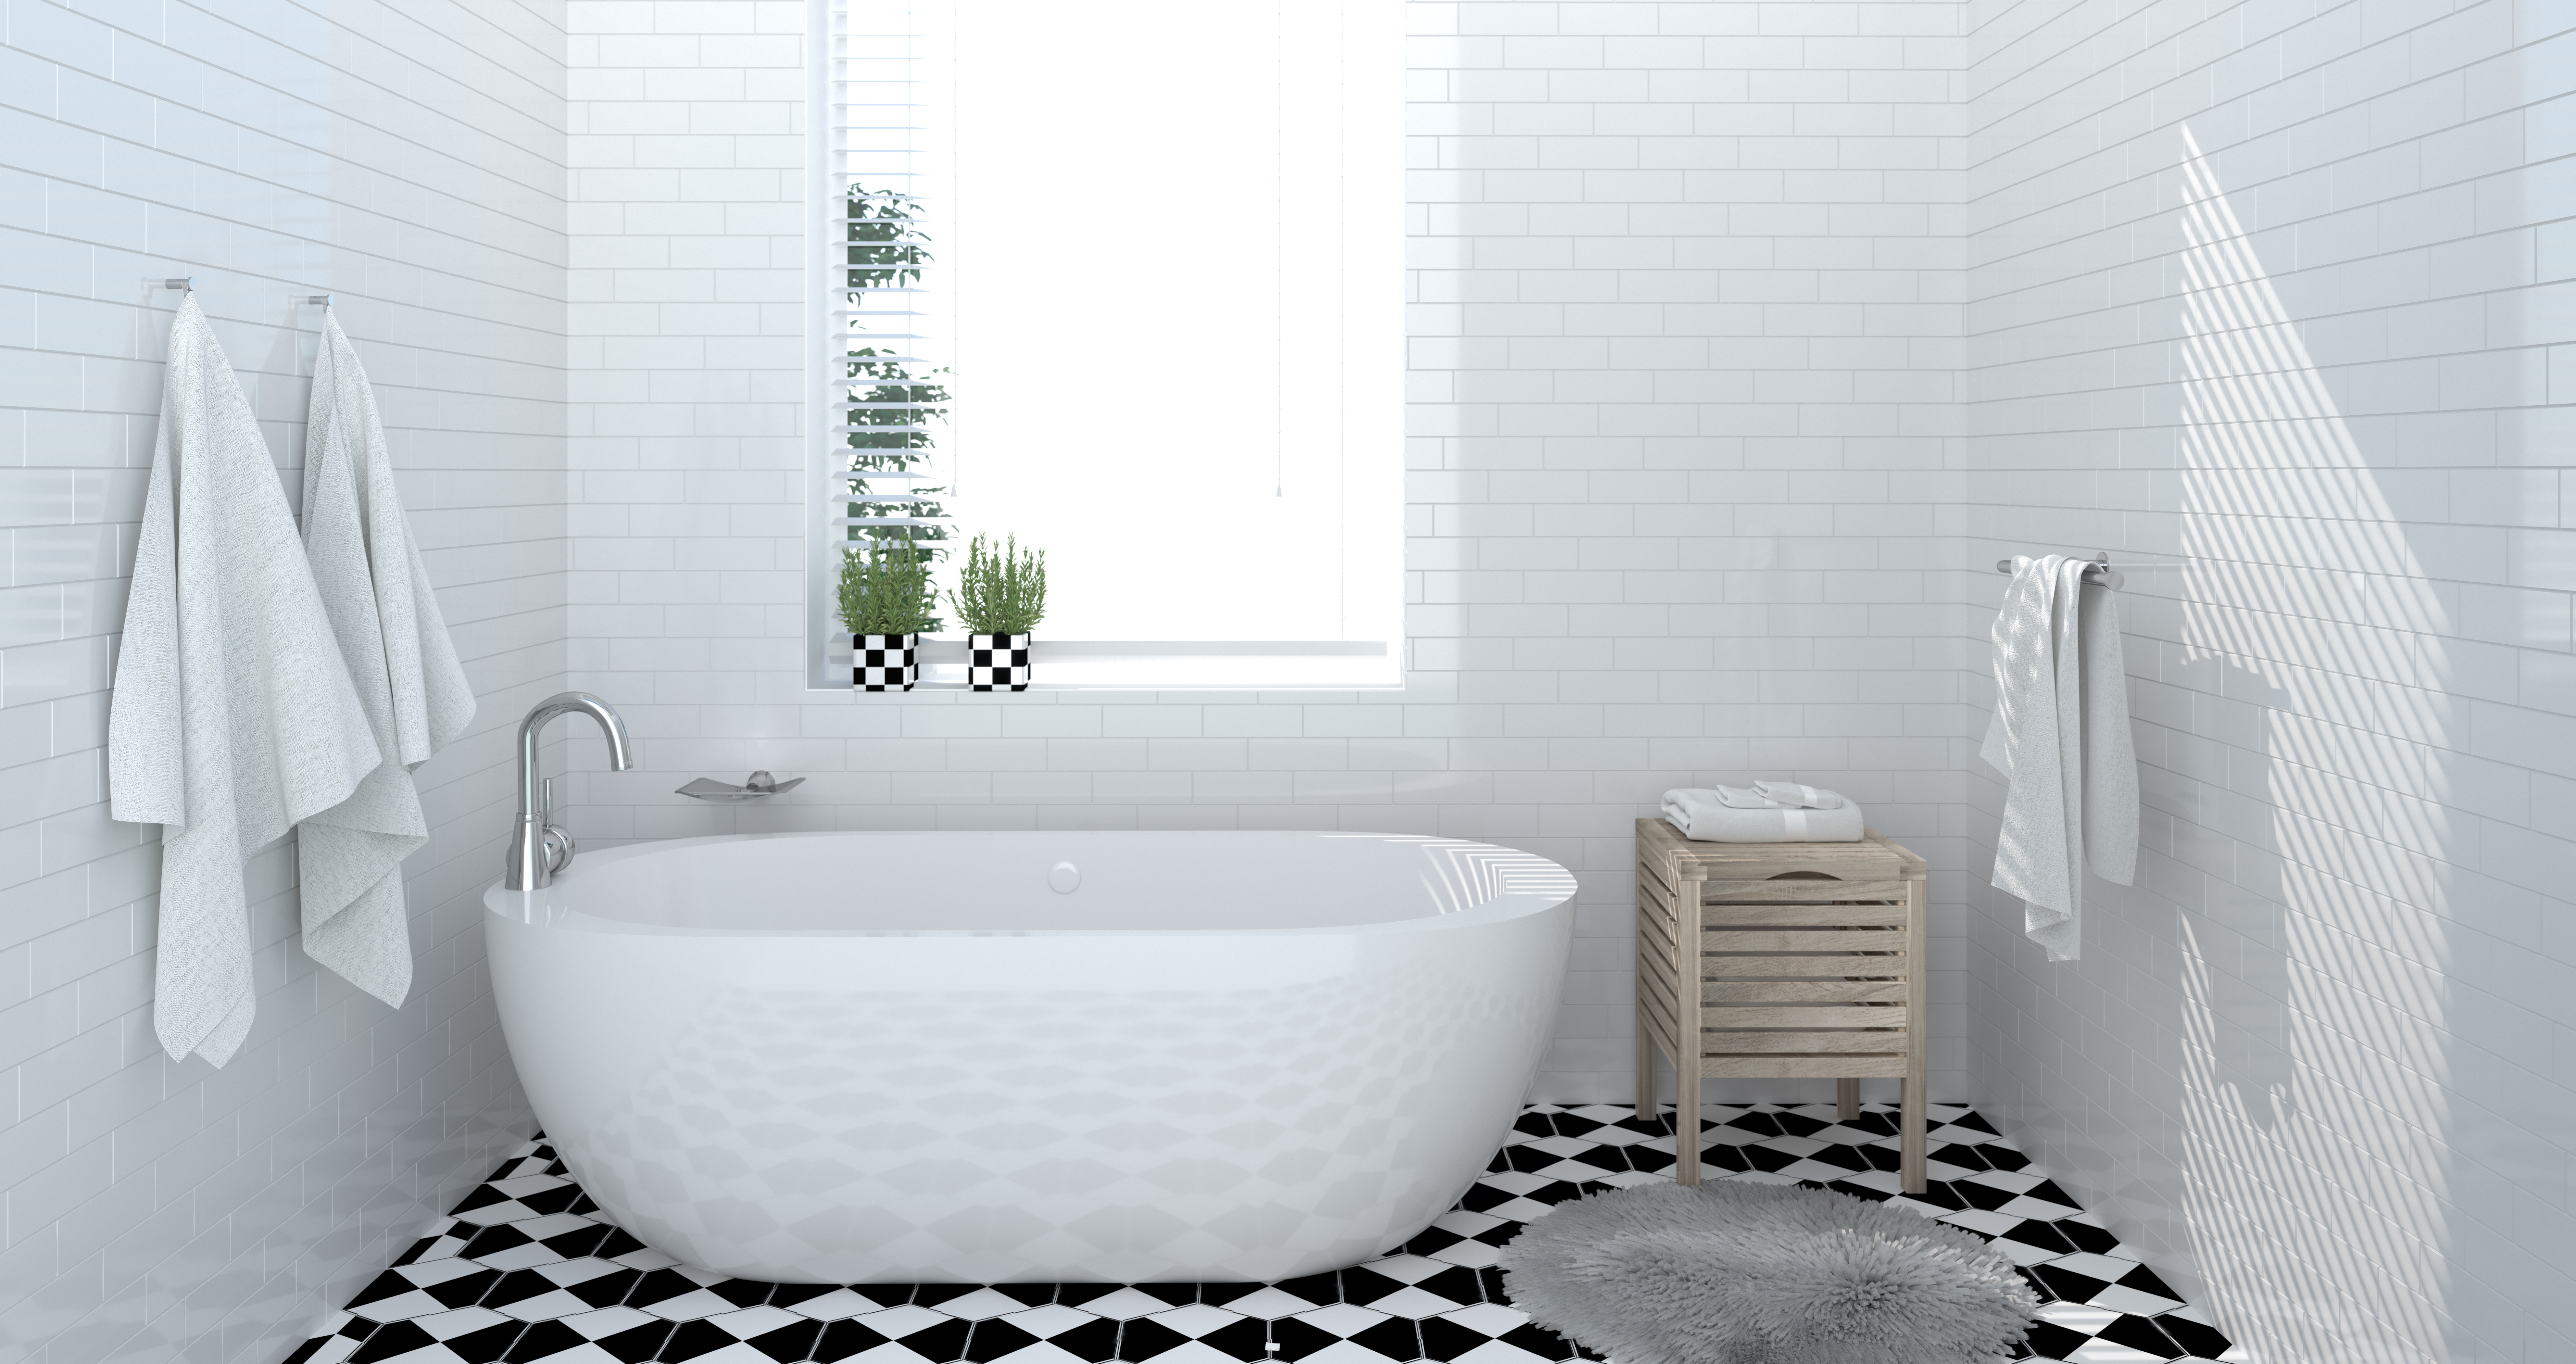 bathroom interior,toilet,shower,modern home design 3d rendering for copy space background white tile bathroom